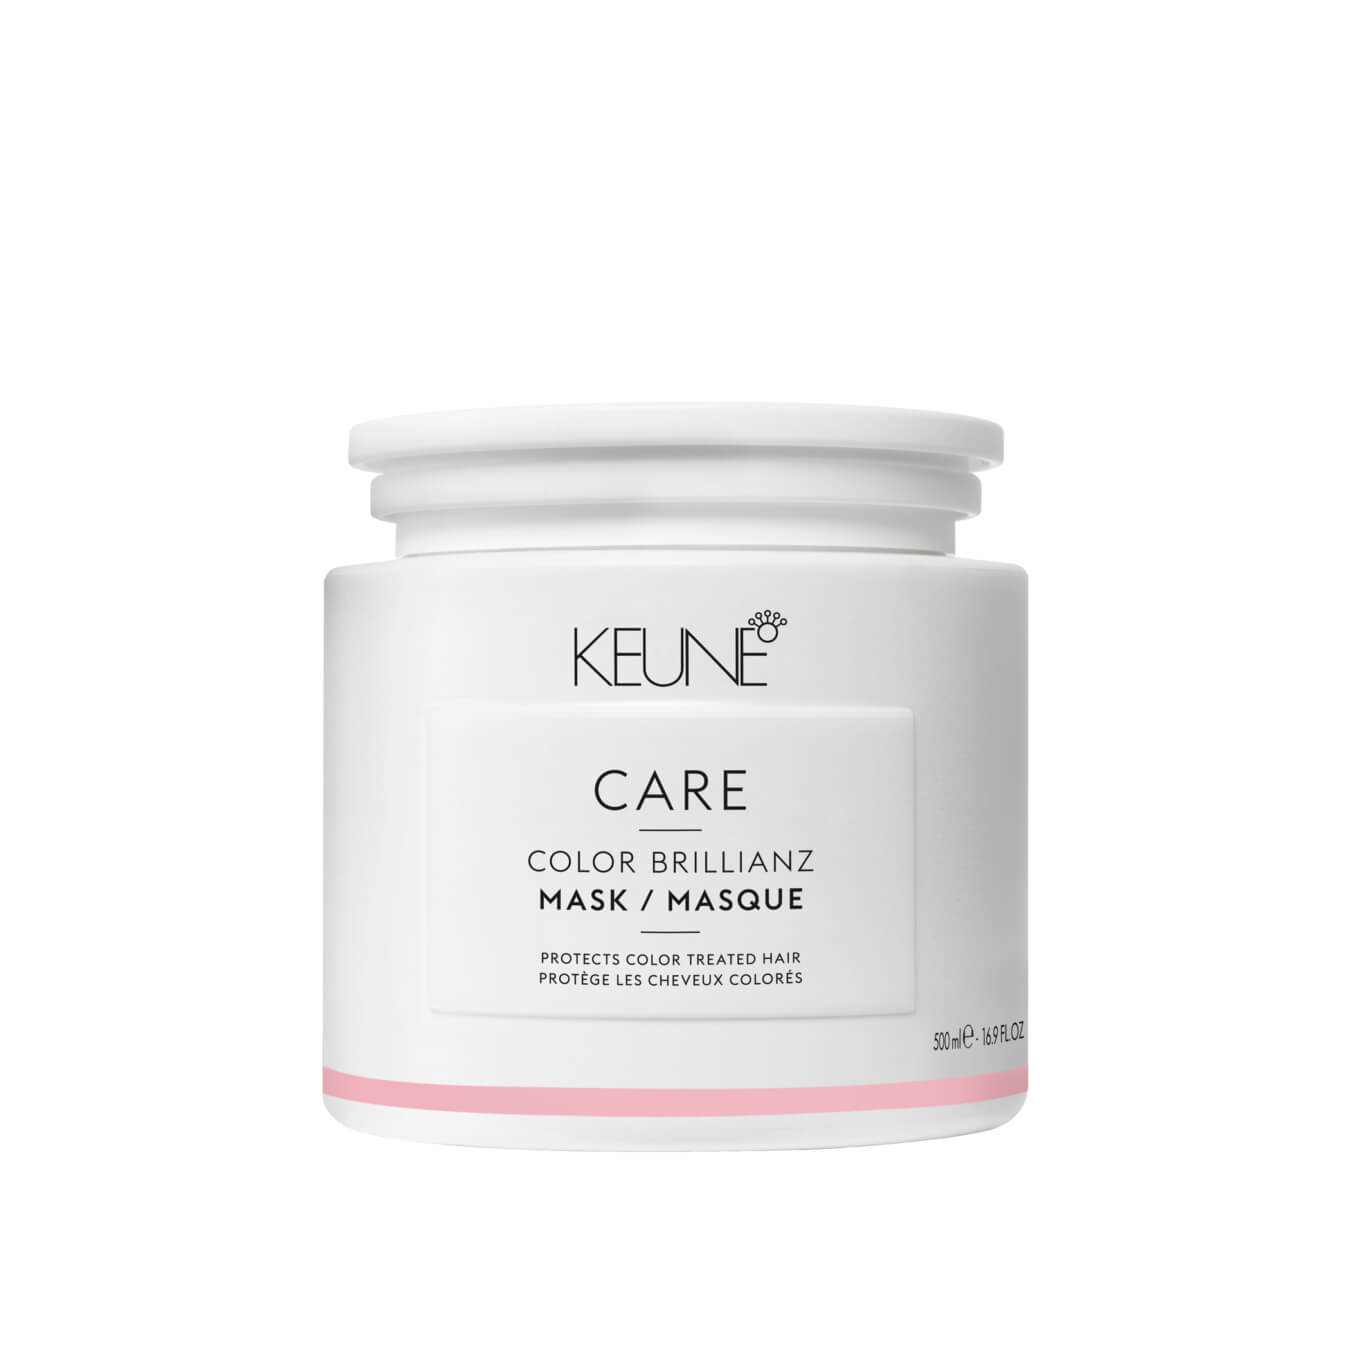 Keune Care Color Brillianz Mask - CFH Care For Hair Webshop #500ml